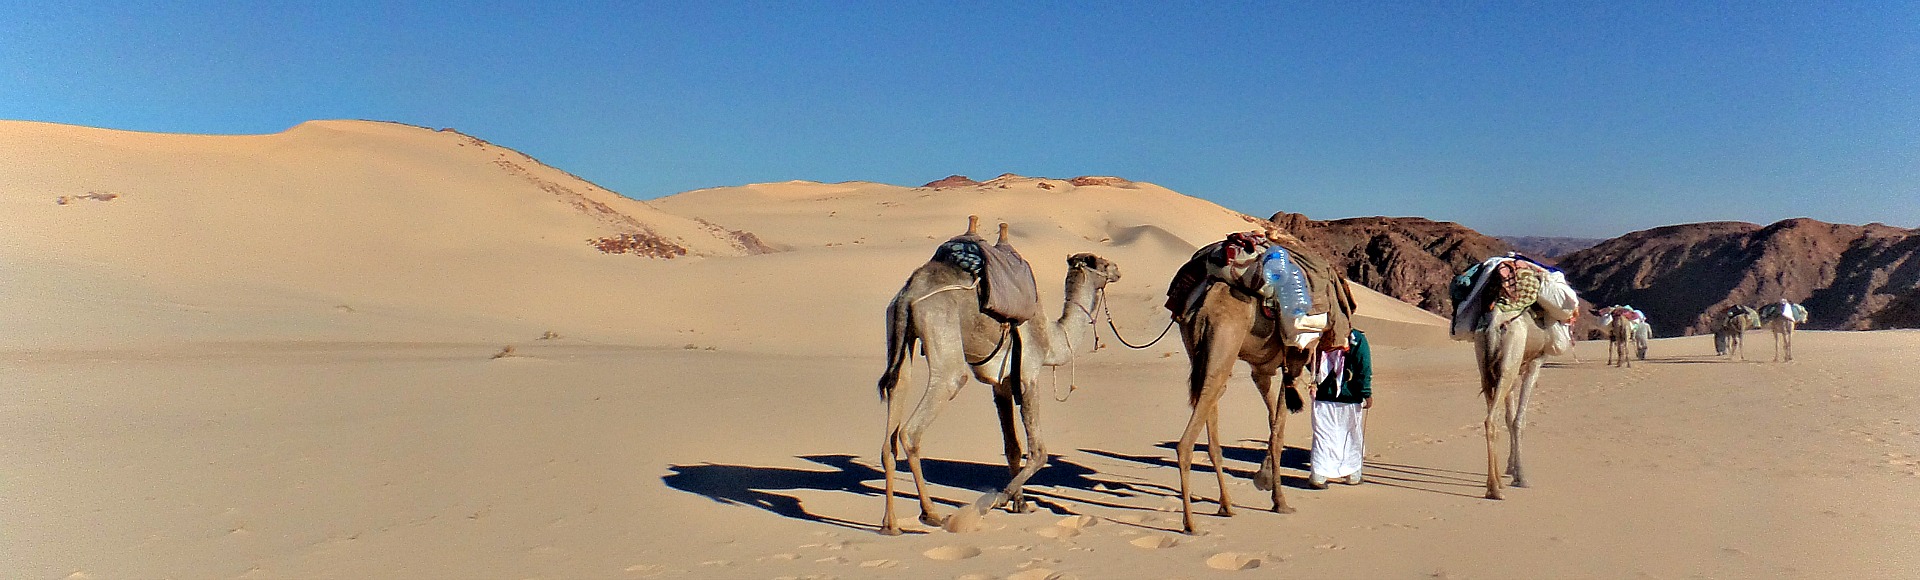 Sinai Woestijn DesertJoy